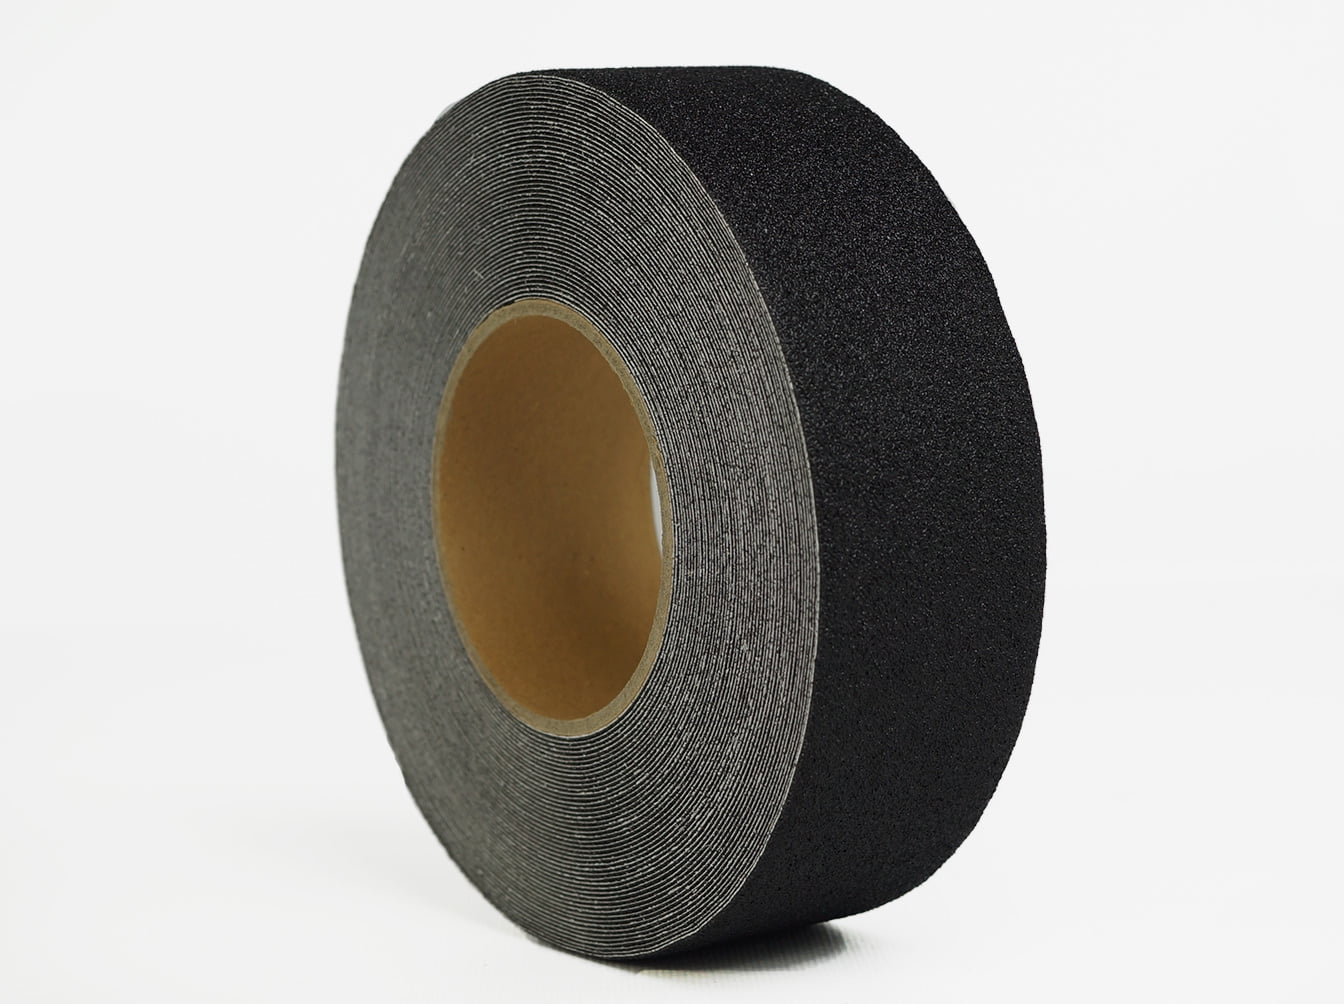 Anti slip tape 3" x33' Roll Black Yellow grit flooring adhesive Safety grip safe 